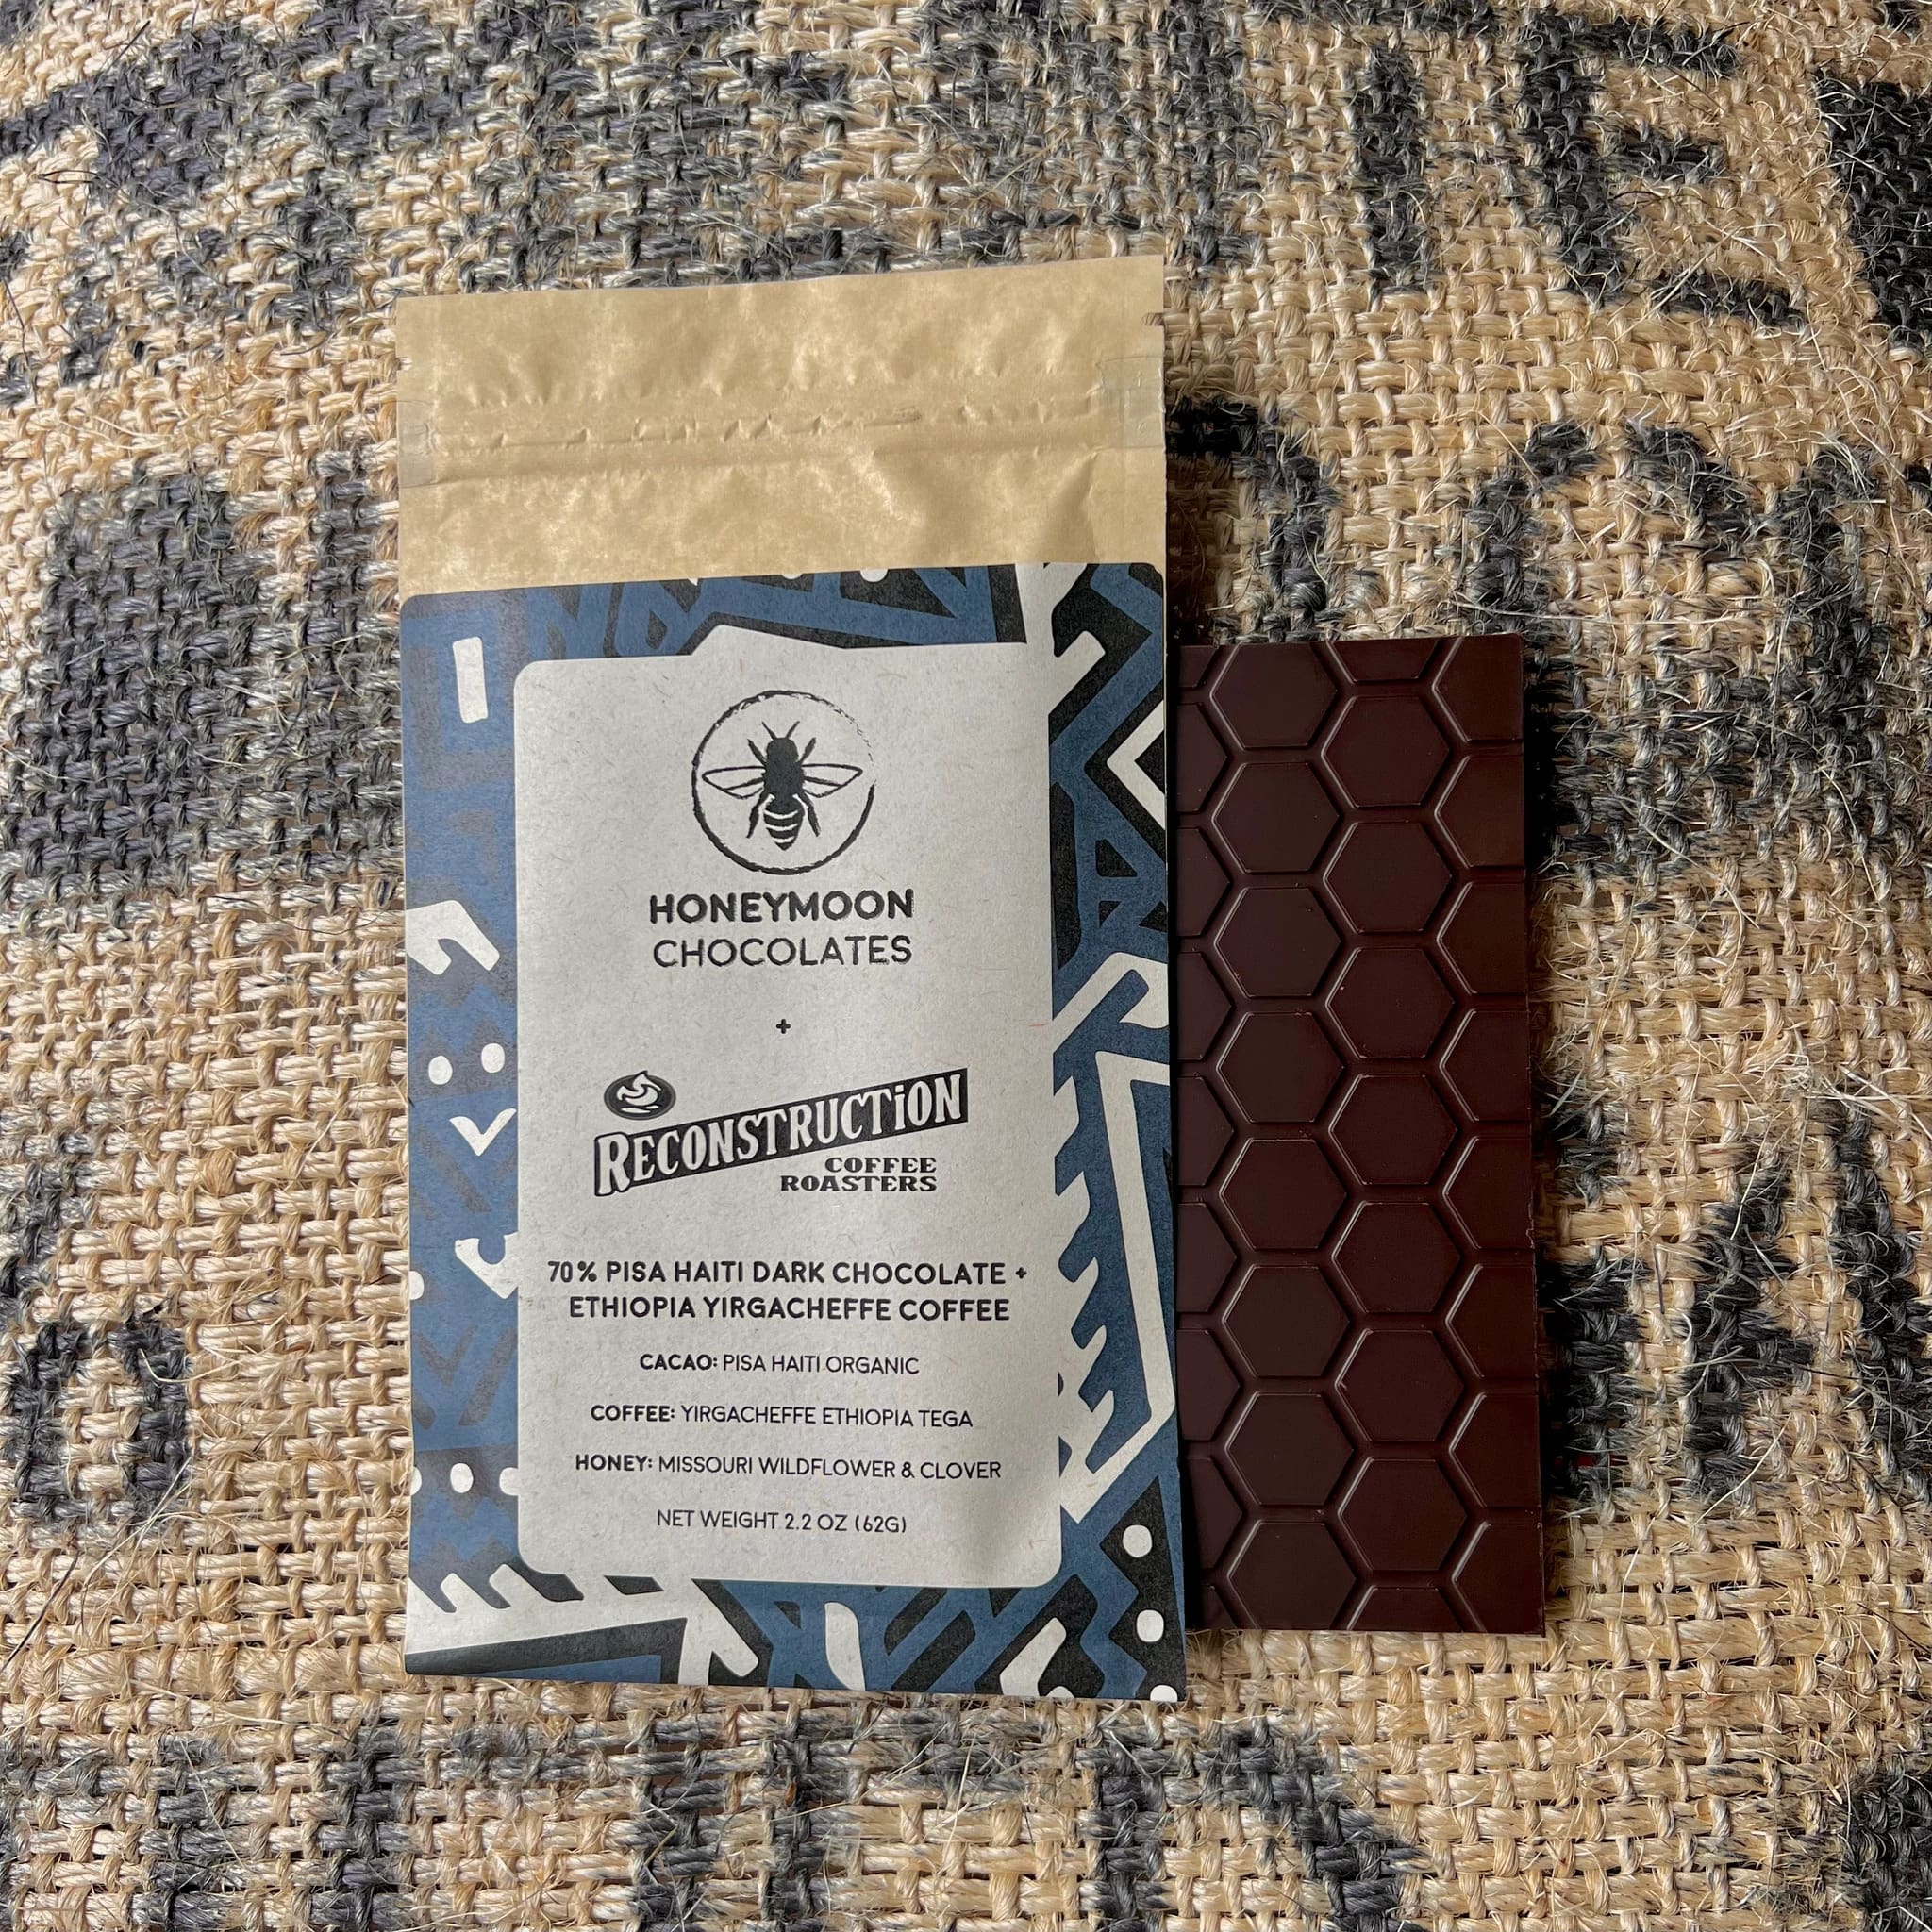 Honeymoon Chocolates Haiti 70 Dark Chocolate Bar with Reconstruction Coffee-min